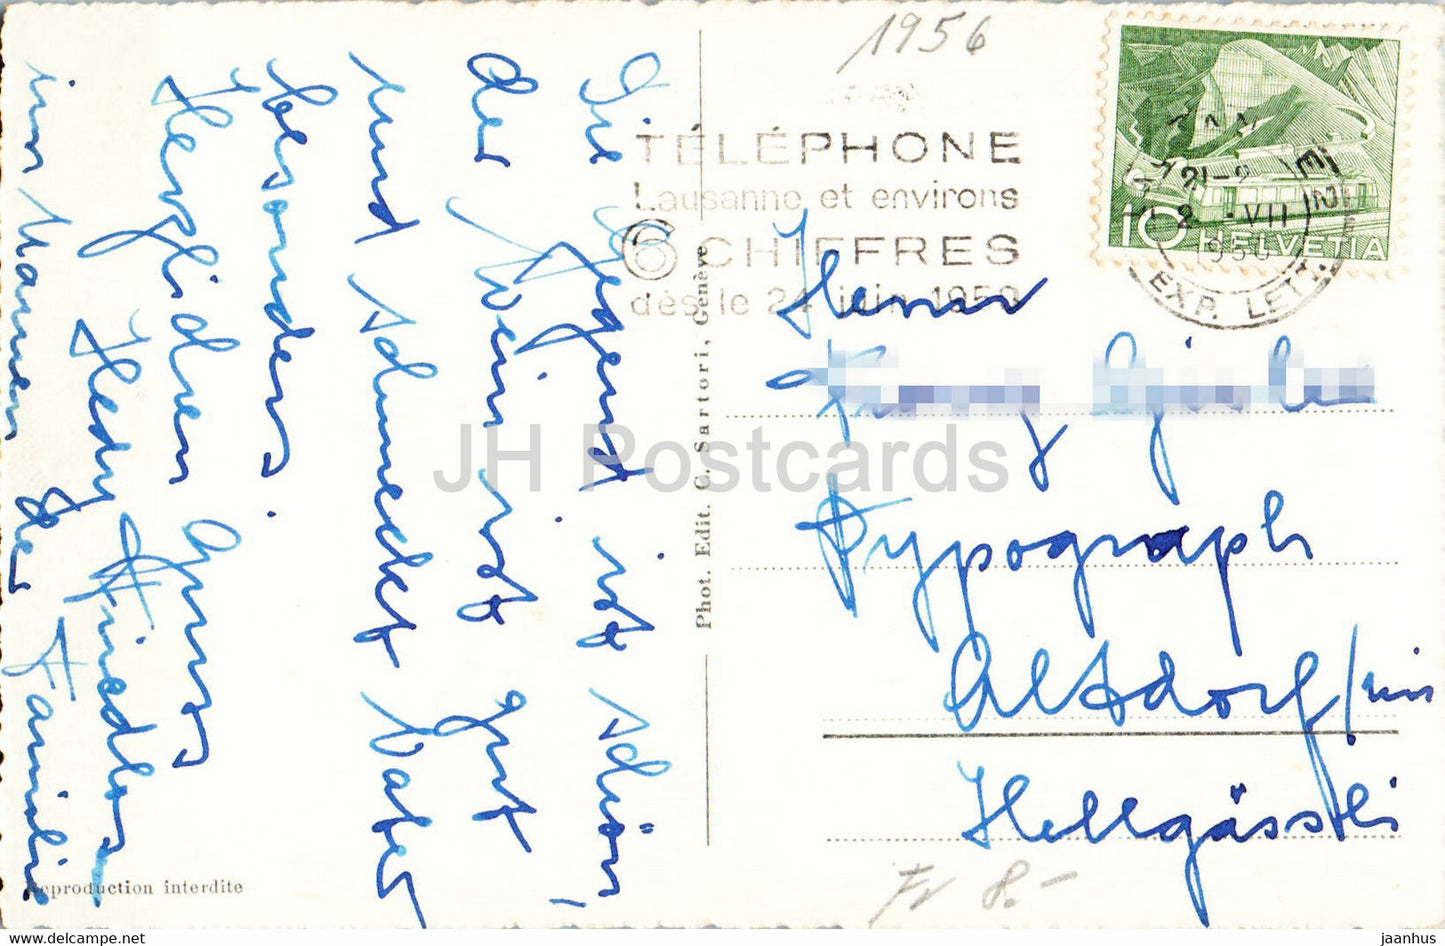 Ouchy - Vue aerienne - vue aérienne - 460 - 1956 - carte postale ancienne - Suisse - occasion